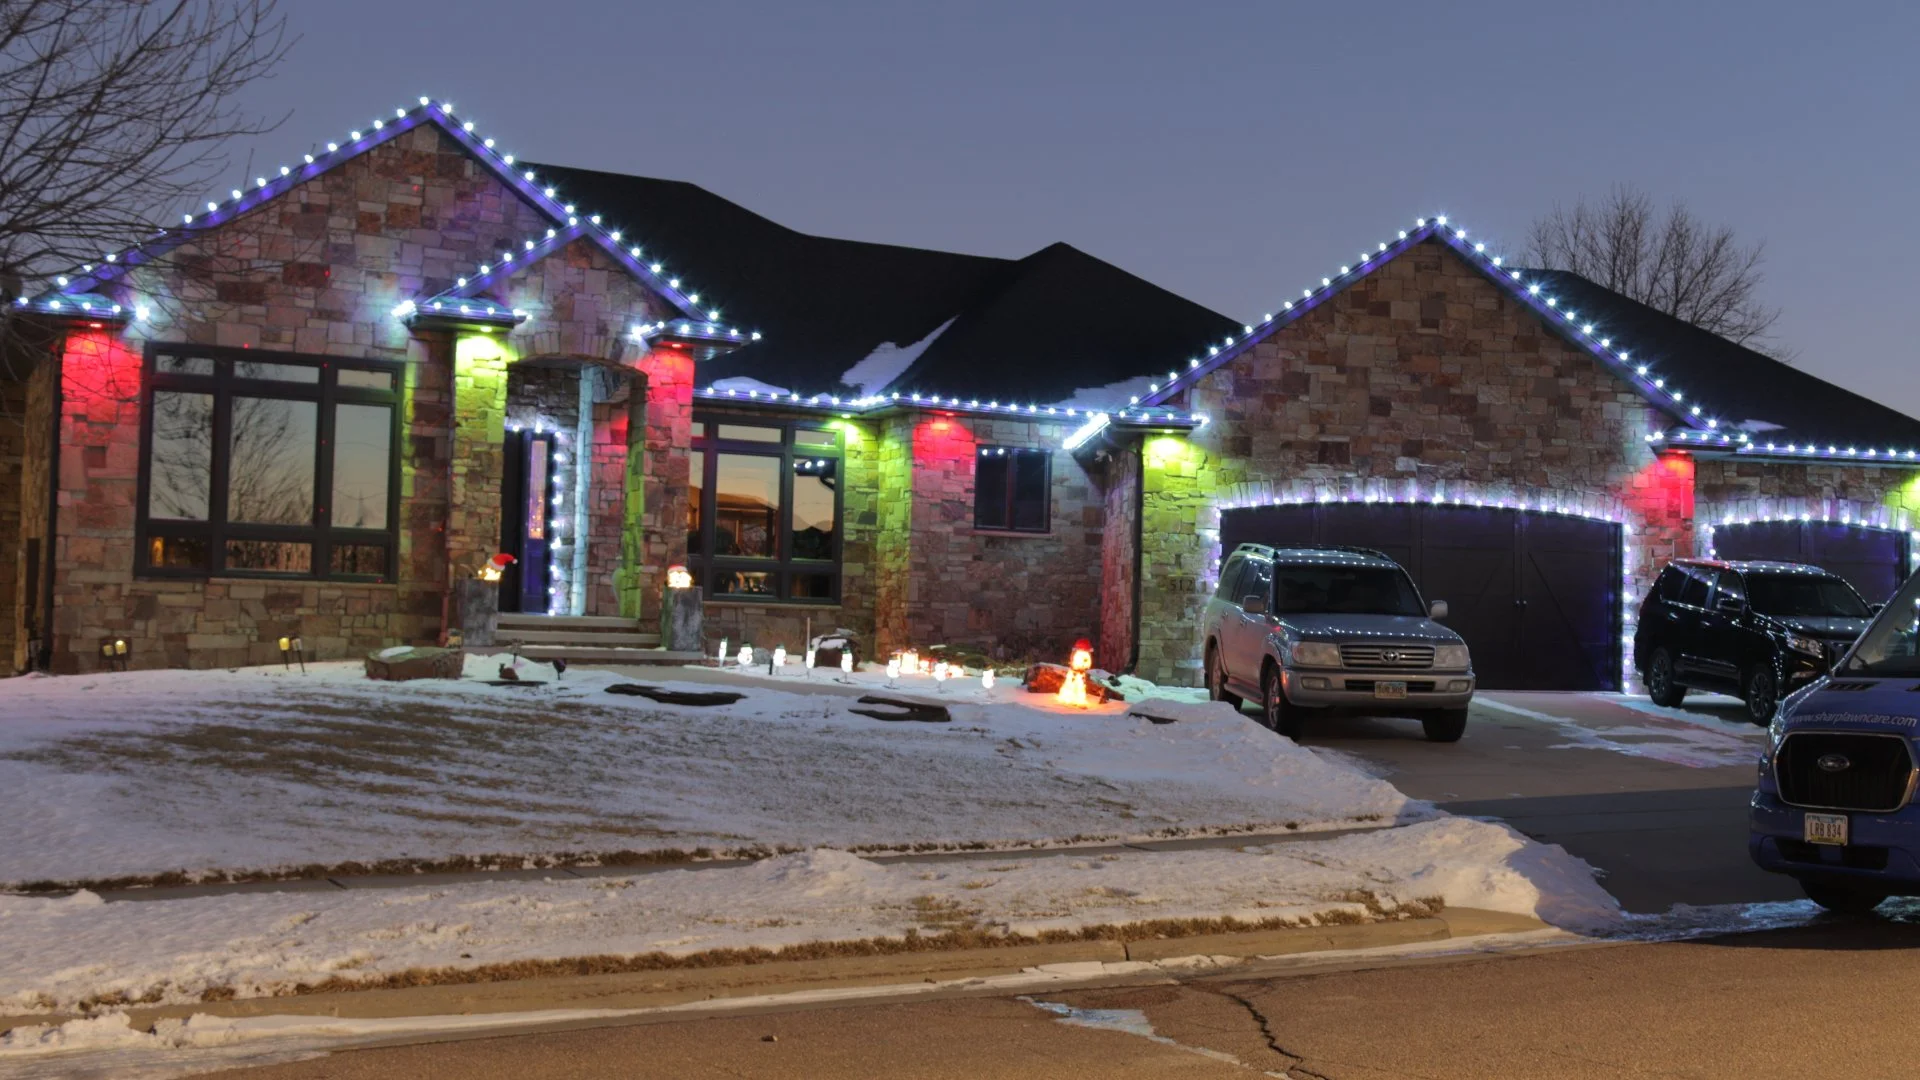 Are LED Bulbs Better for Christmas Lights?